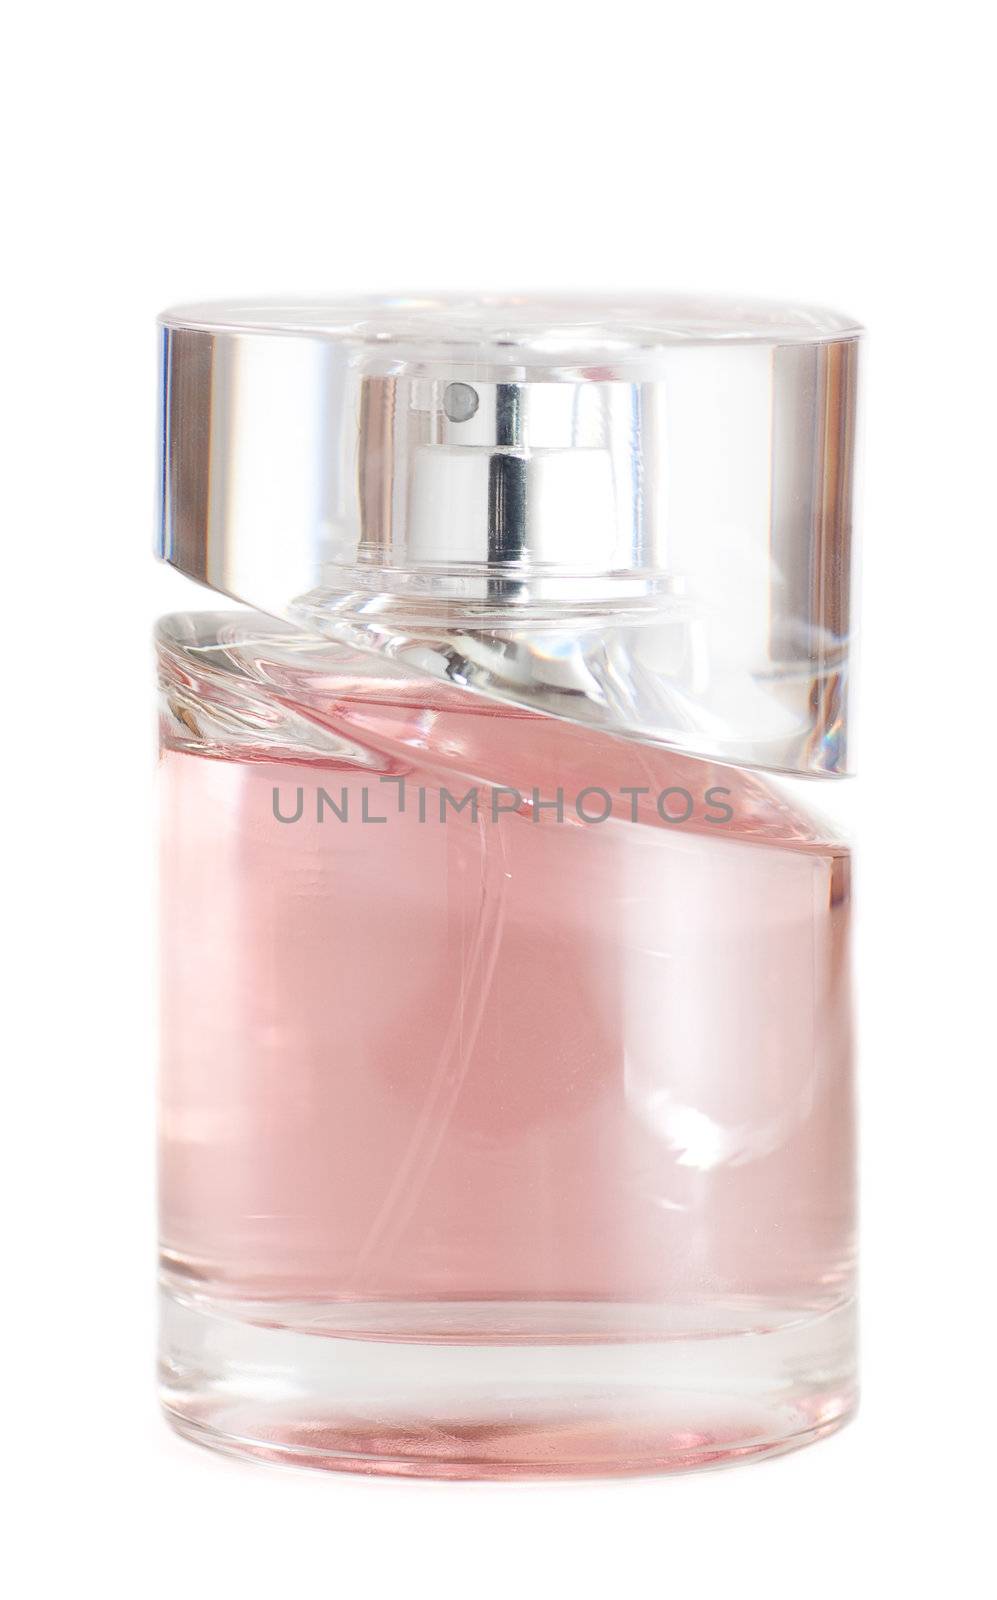 Transparent perfume bottle isolated on while background.